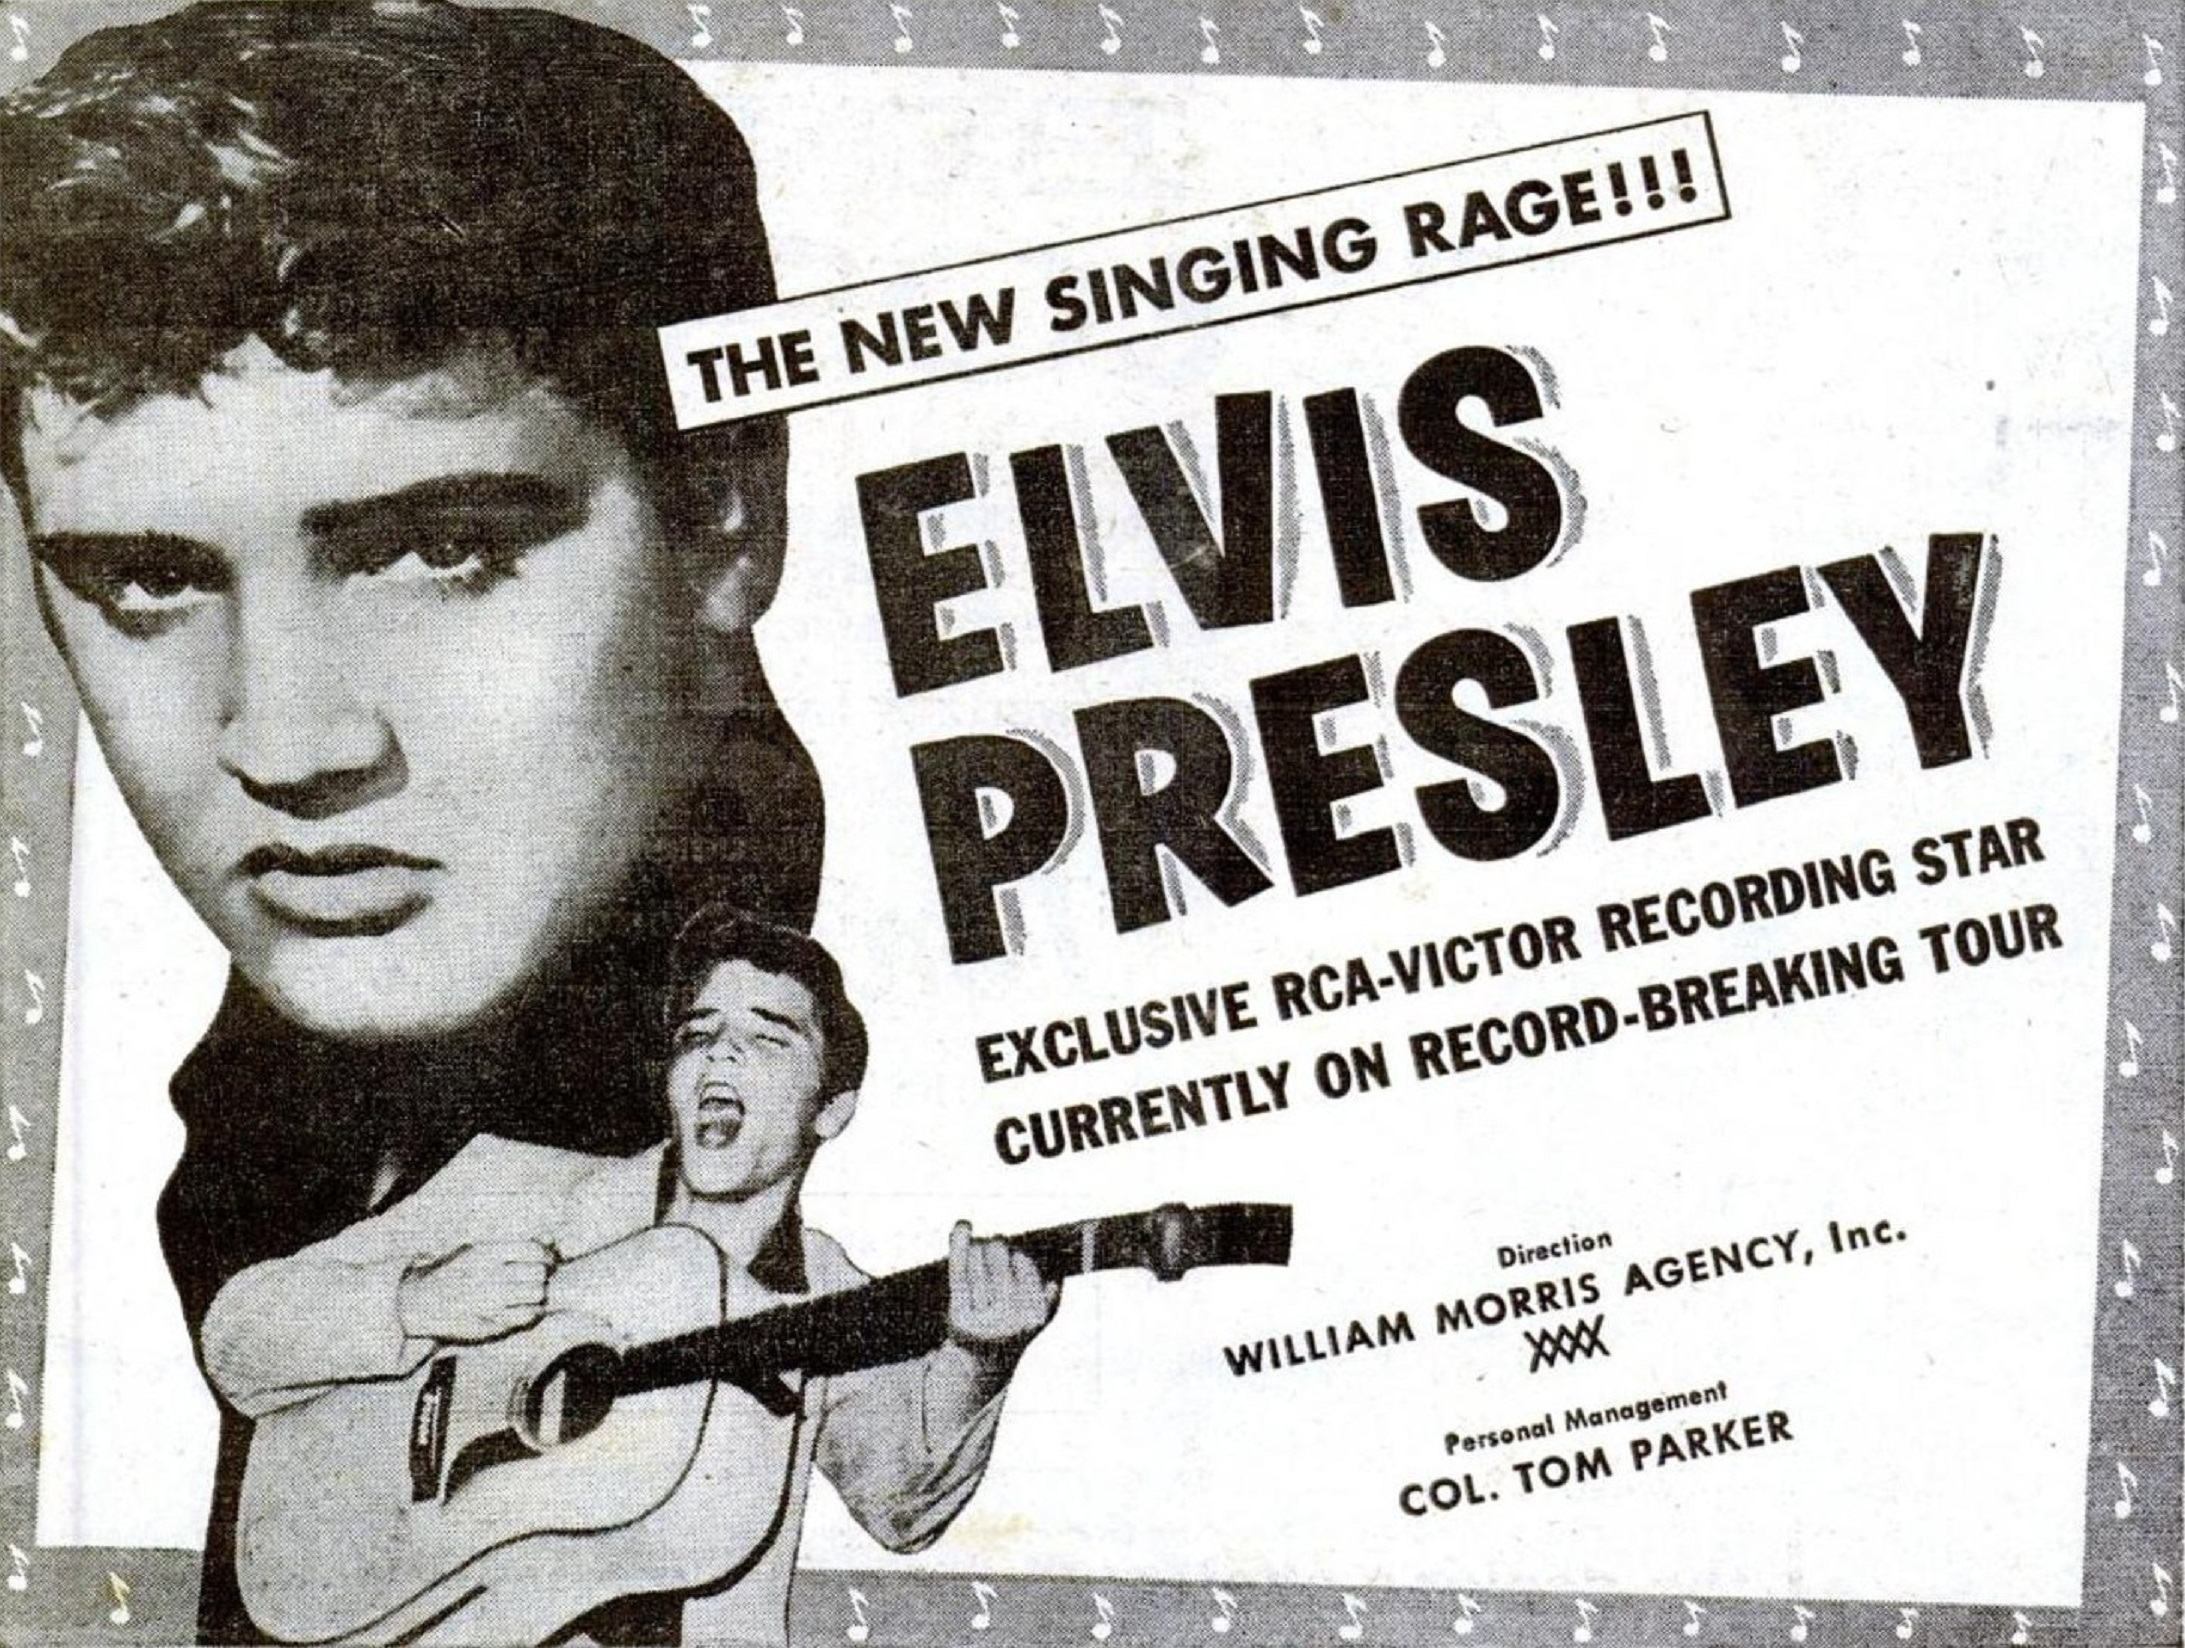 billboard advertisement for Elvis Presley, 10 March 1956